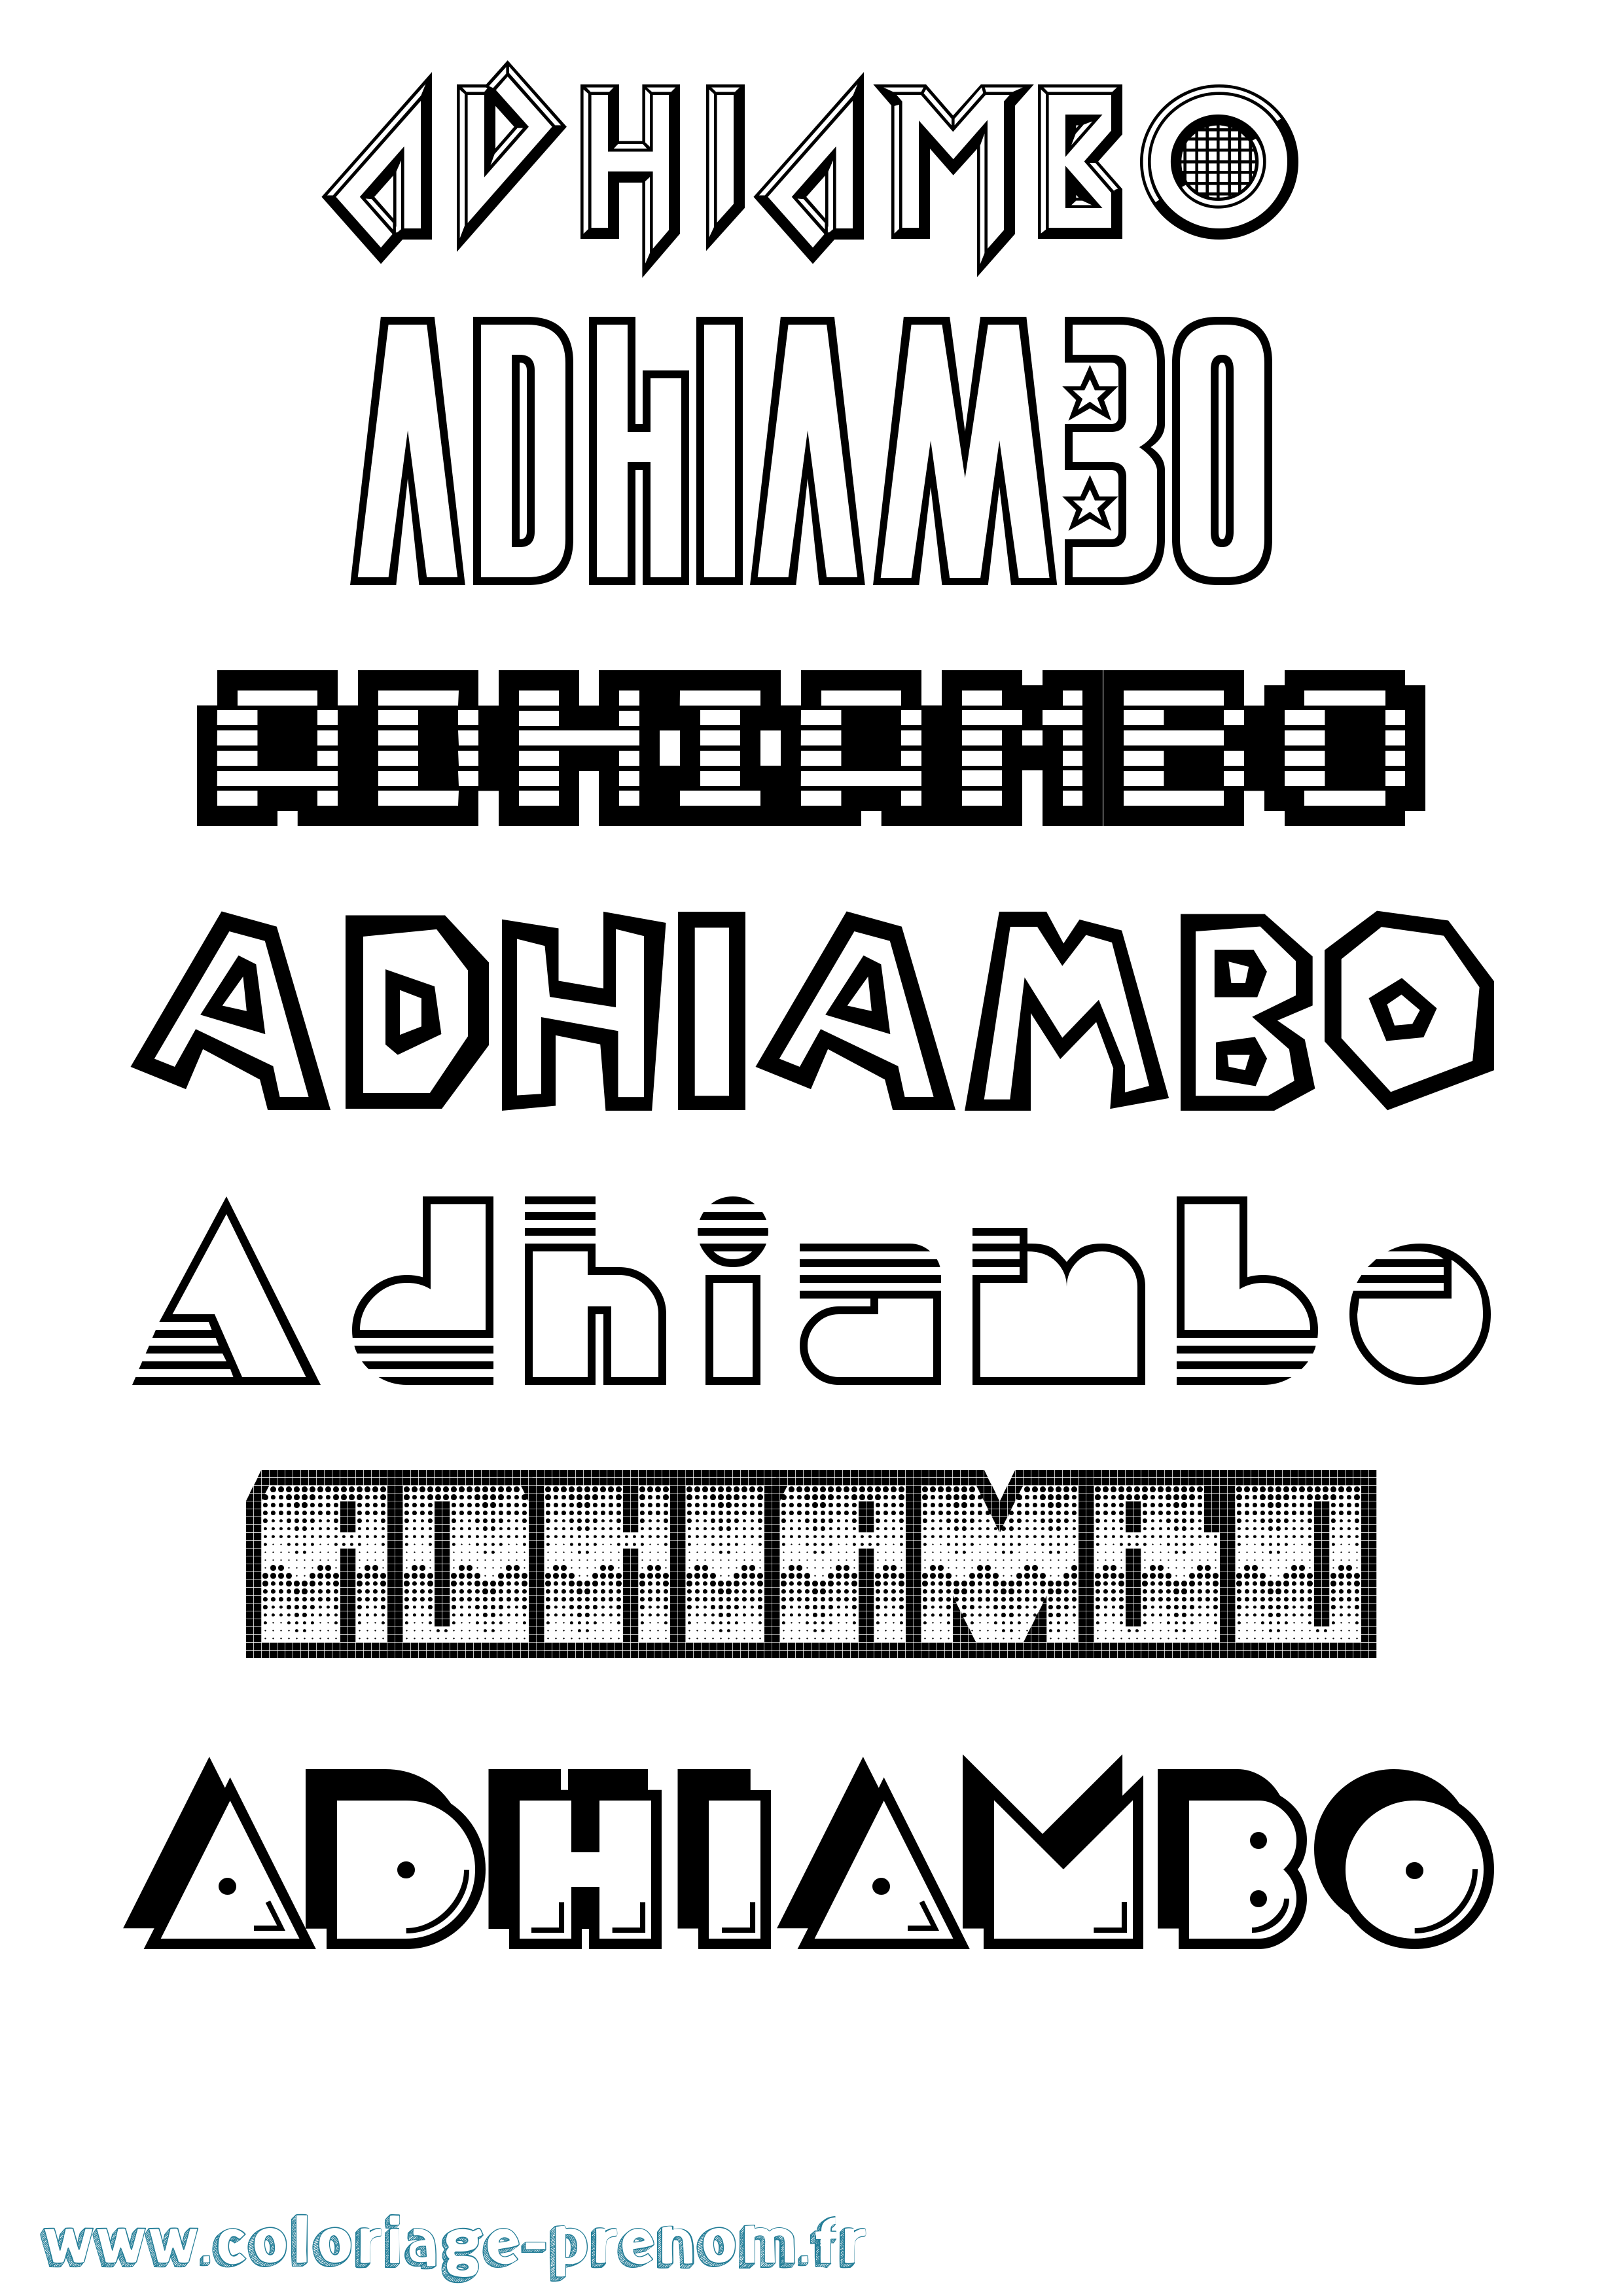 Coloriage prénom Adhiambo Jeux Vidéos